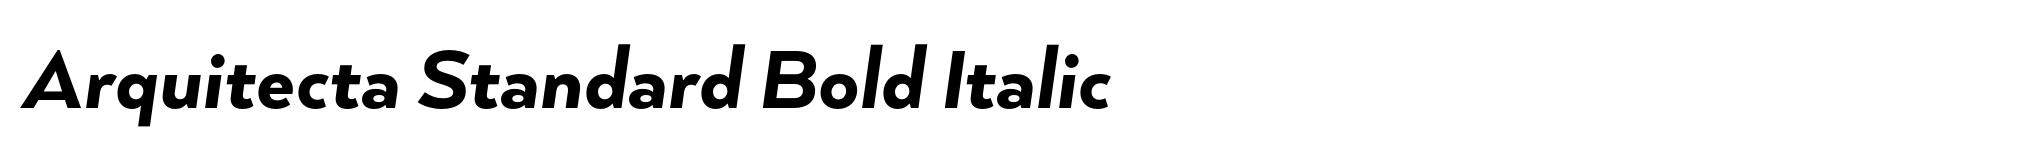 Arquitecta Standard Bold Italic image